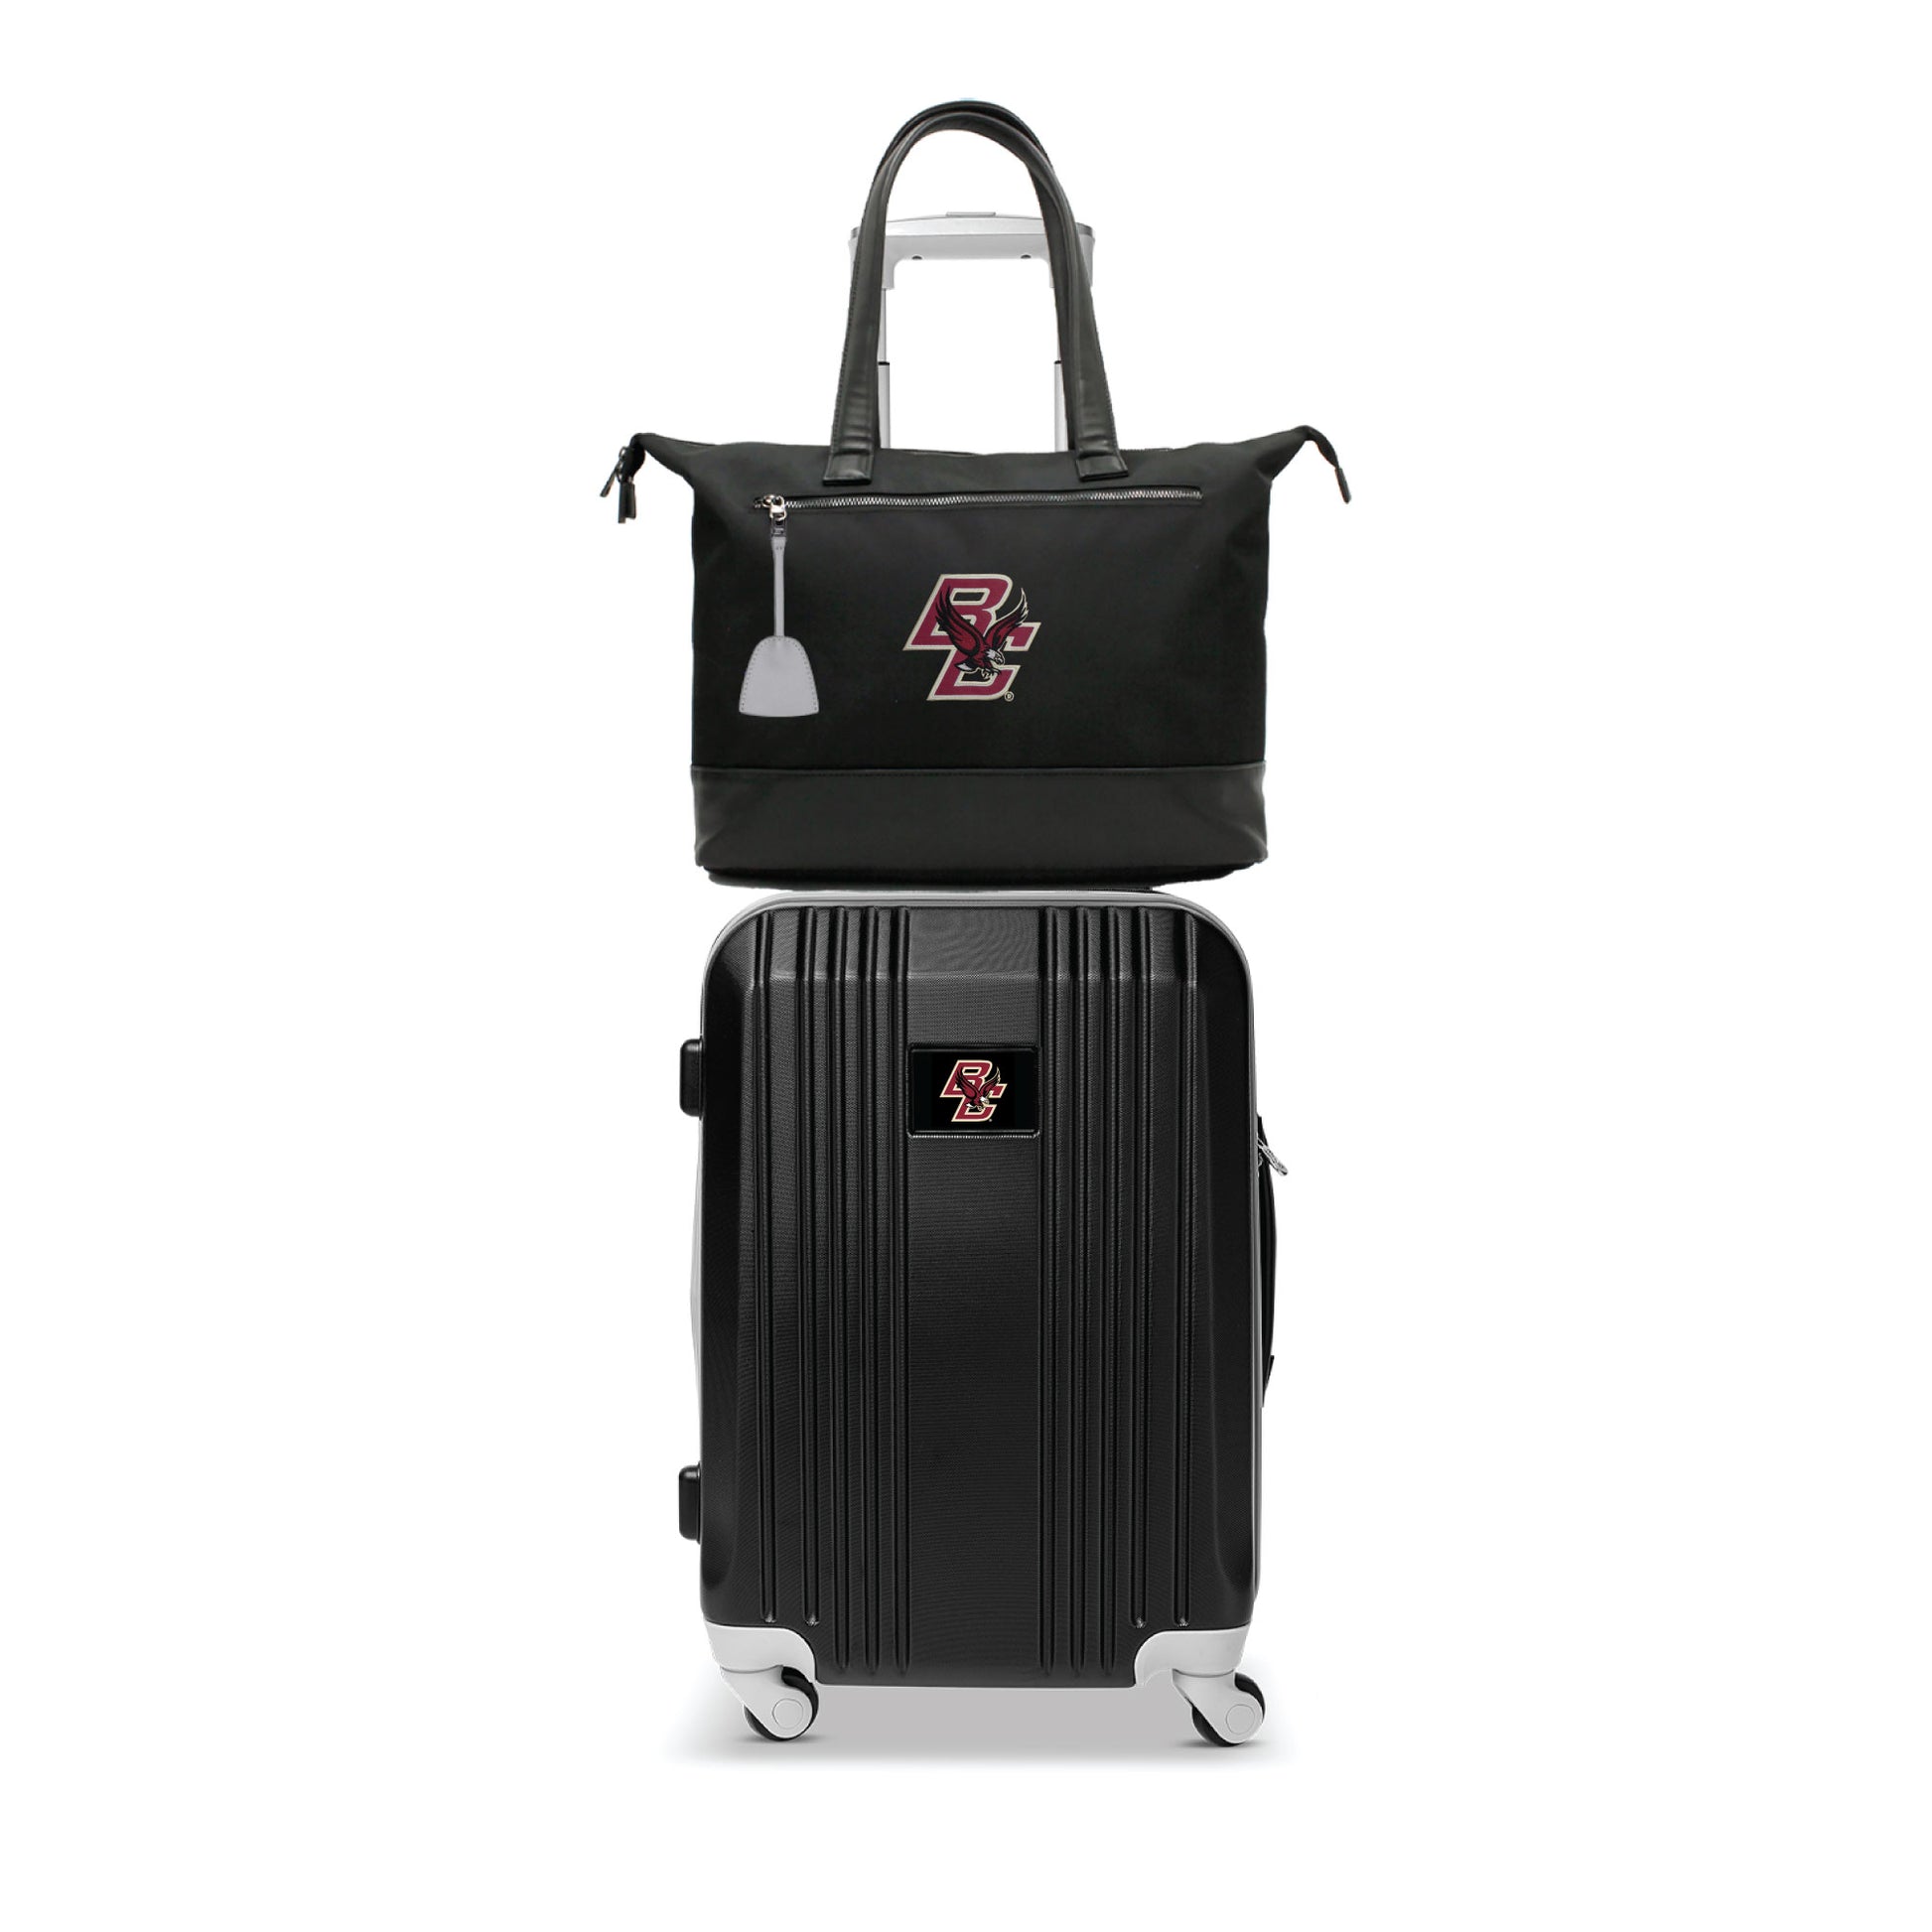 Boston College Eagles Premium Laptop Tote Bag and Luggage Set